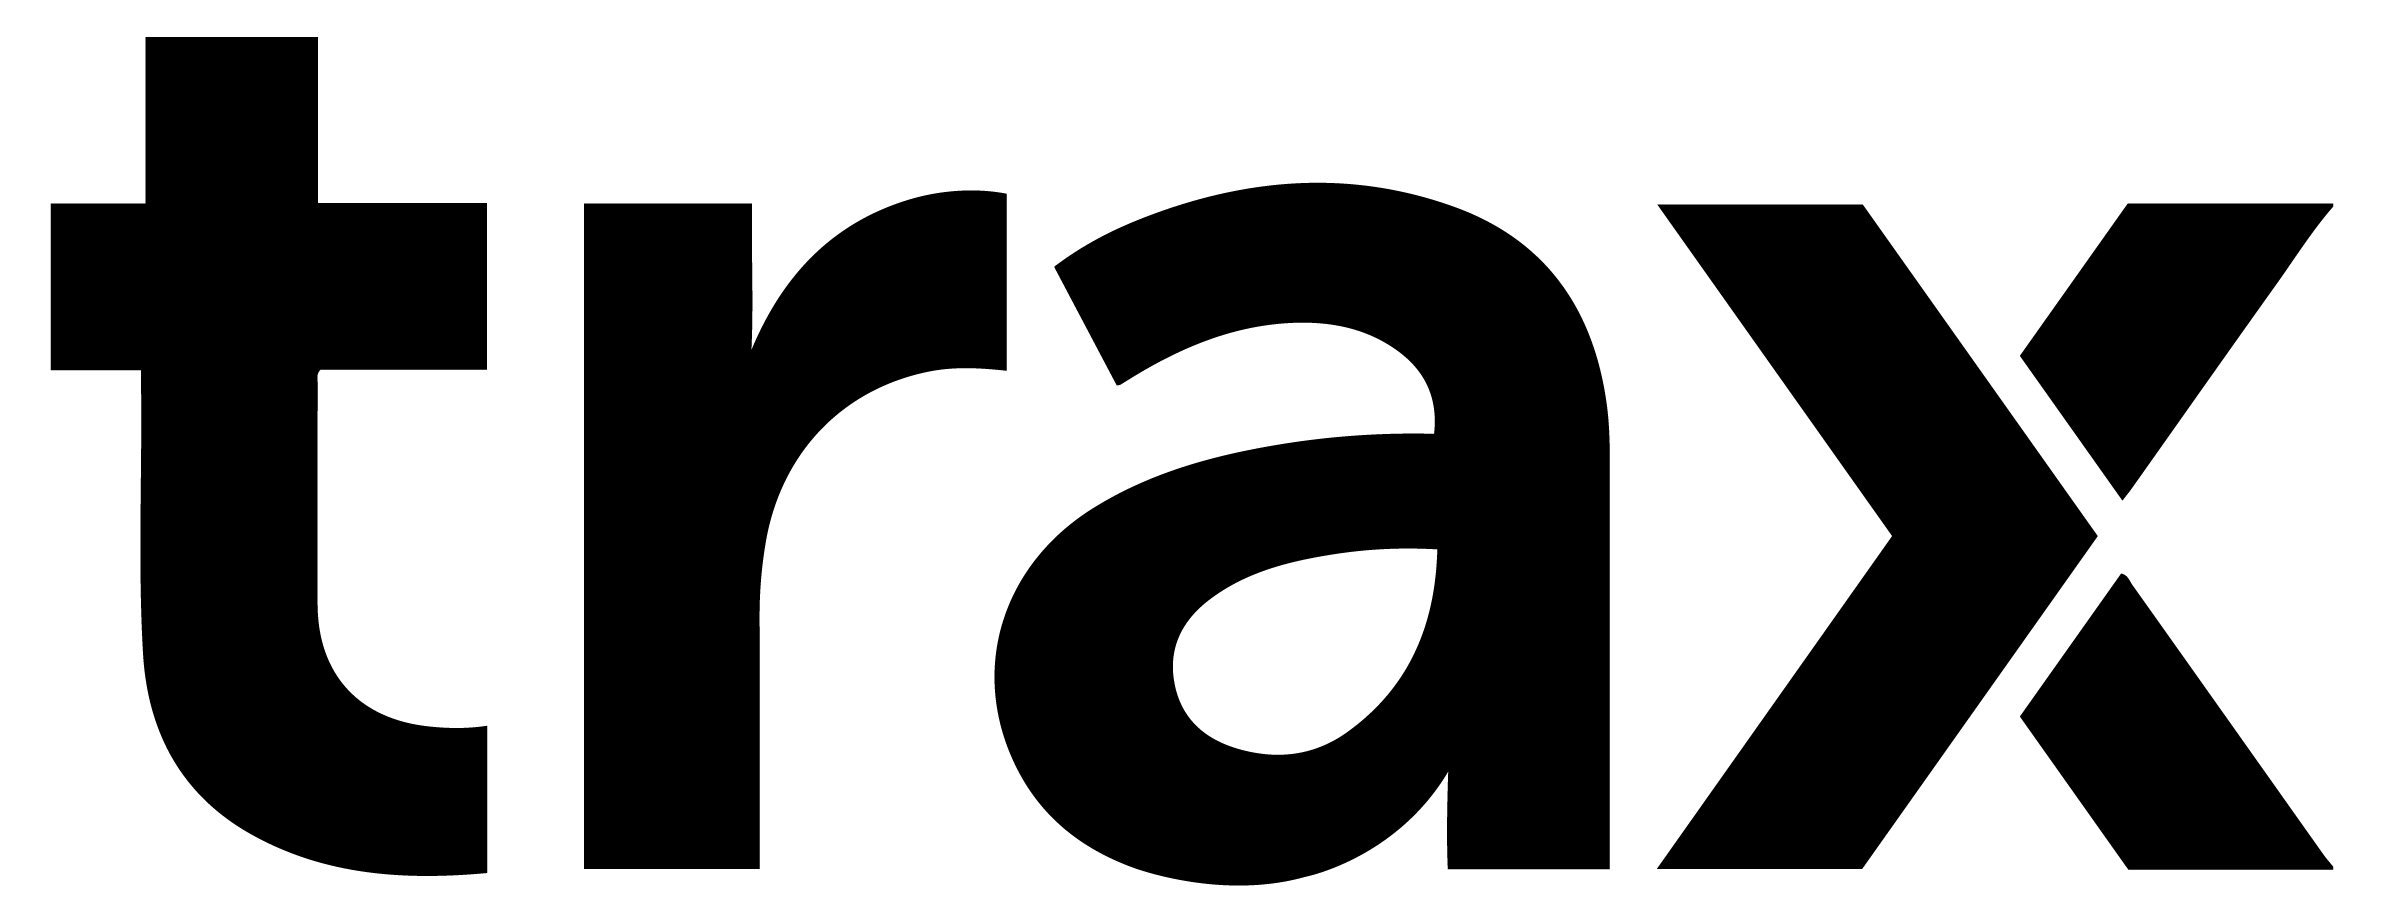 Trademark Logo TRAX